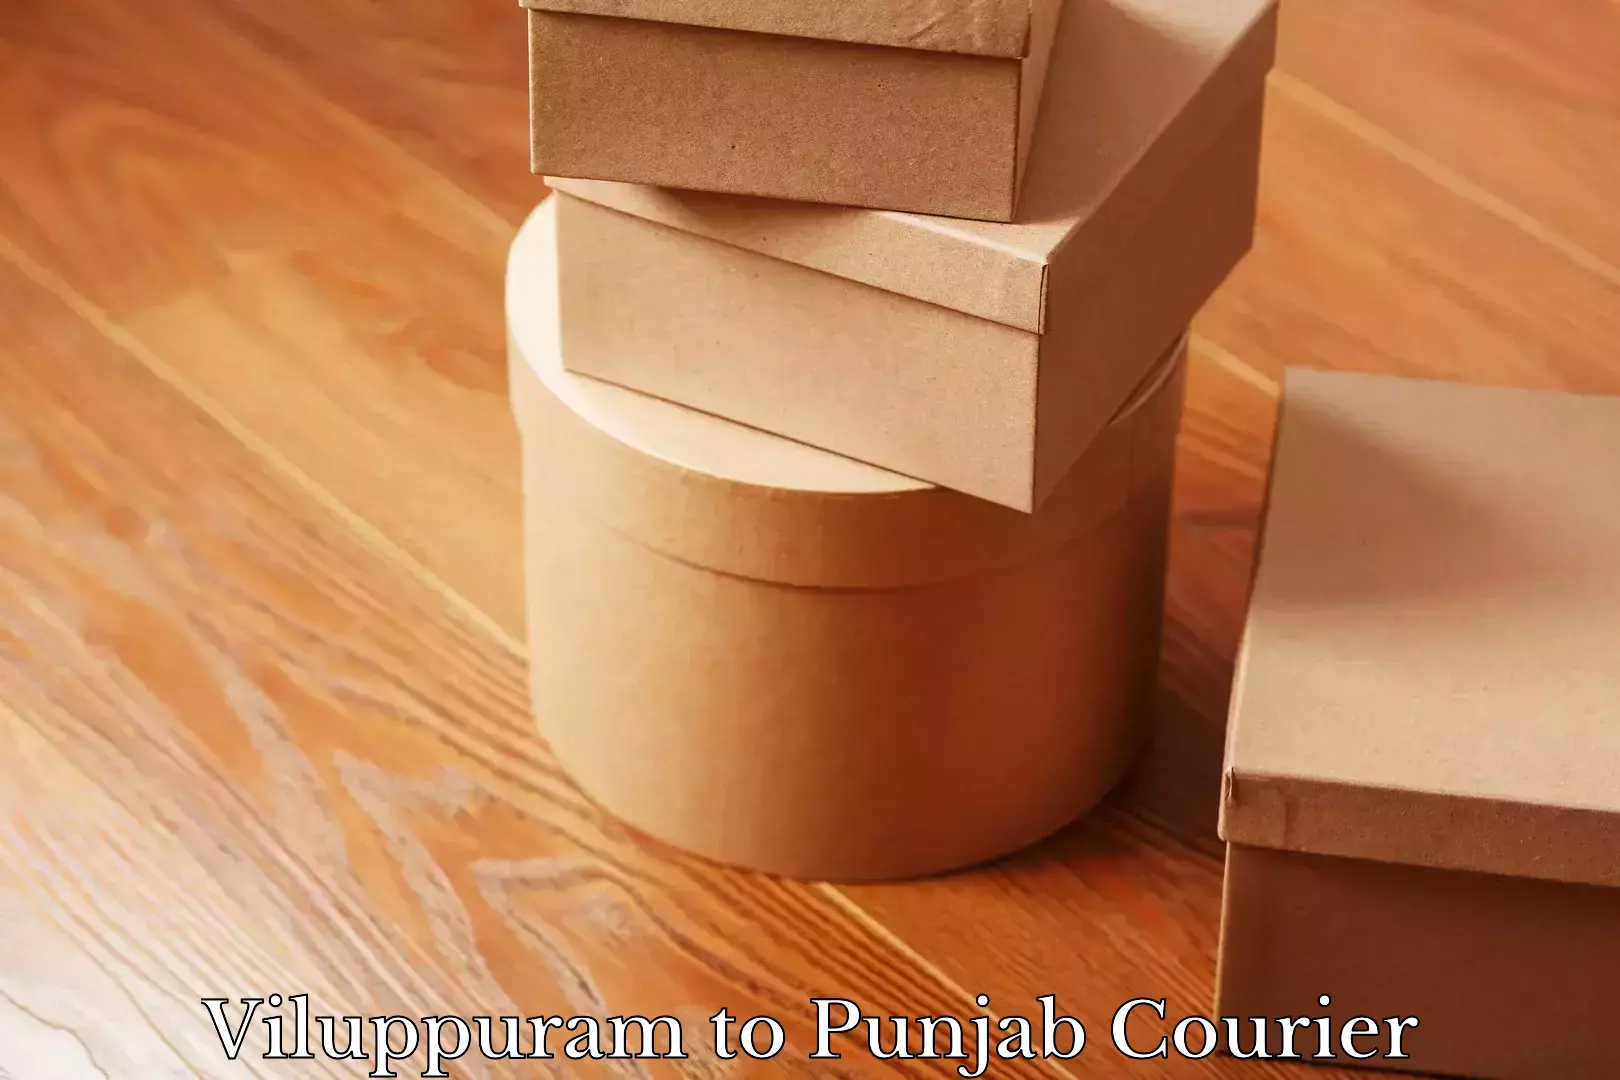 Residential courier service Viluppuram to Punjab